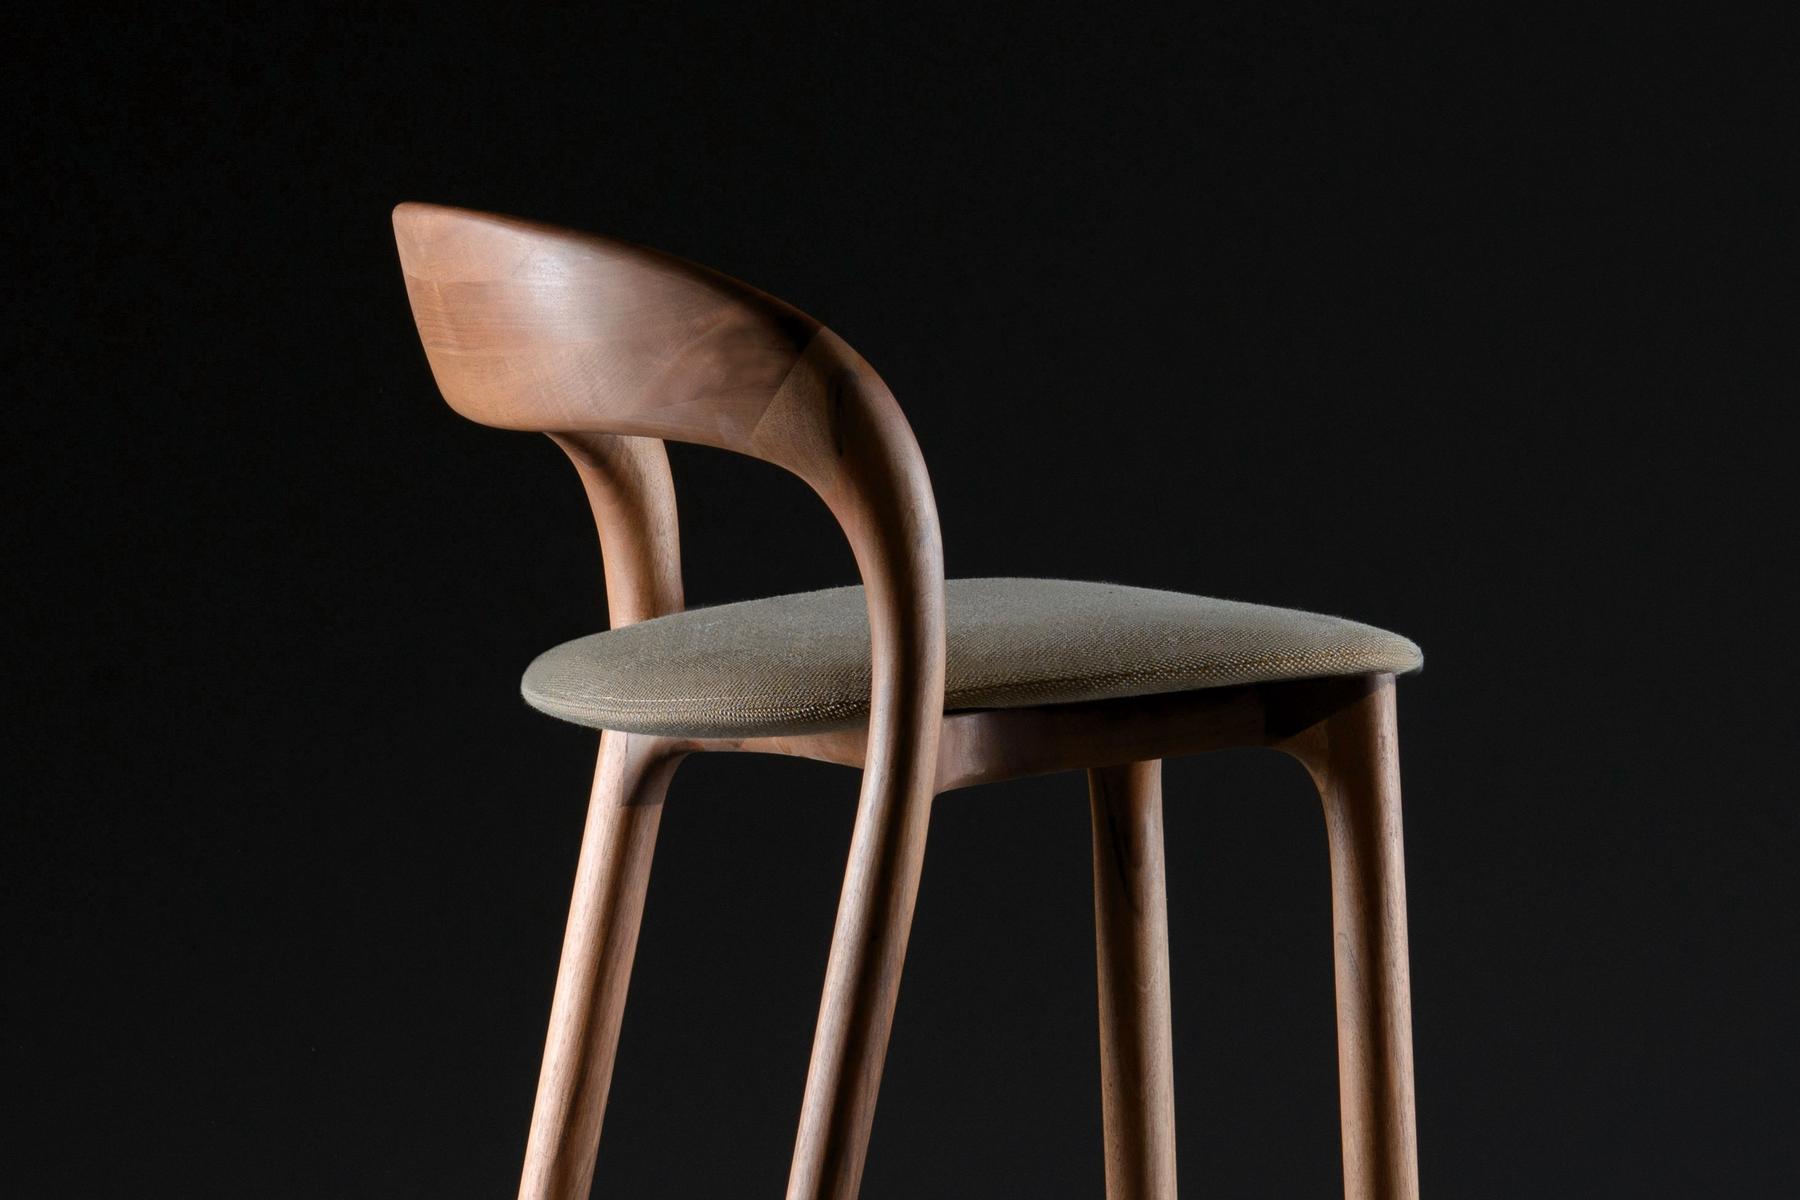 bespoke bar stool for high end kitchen design